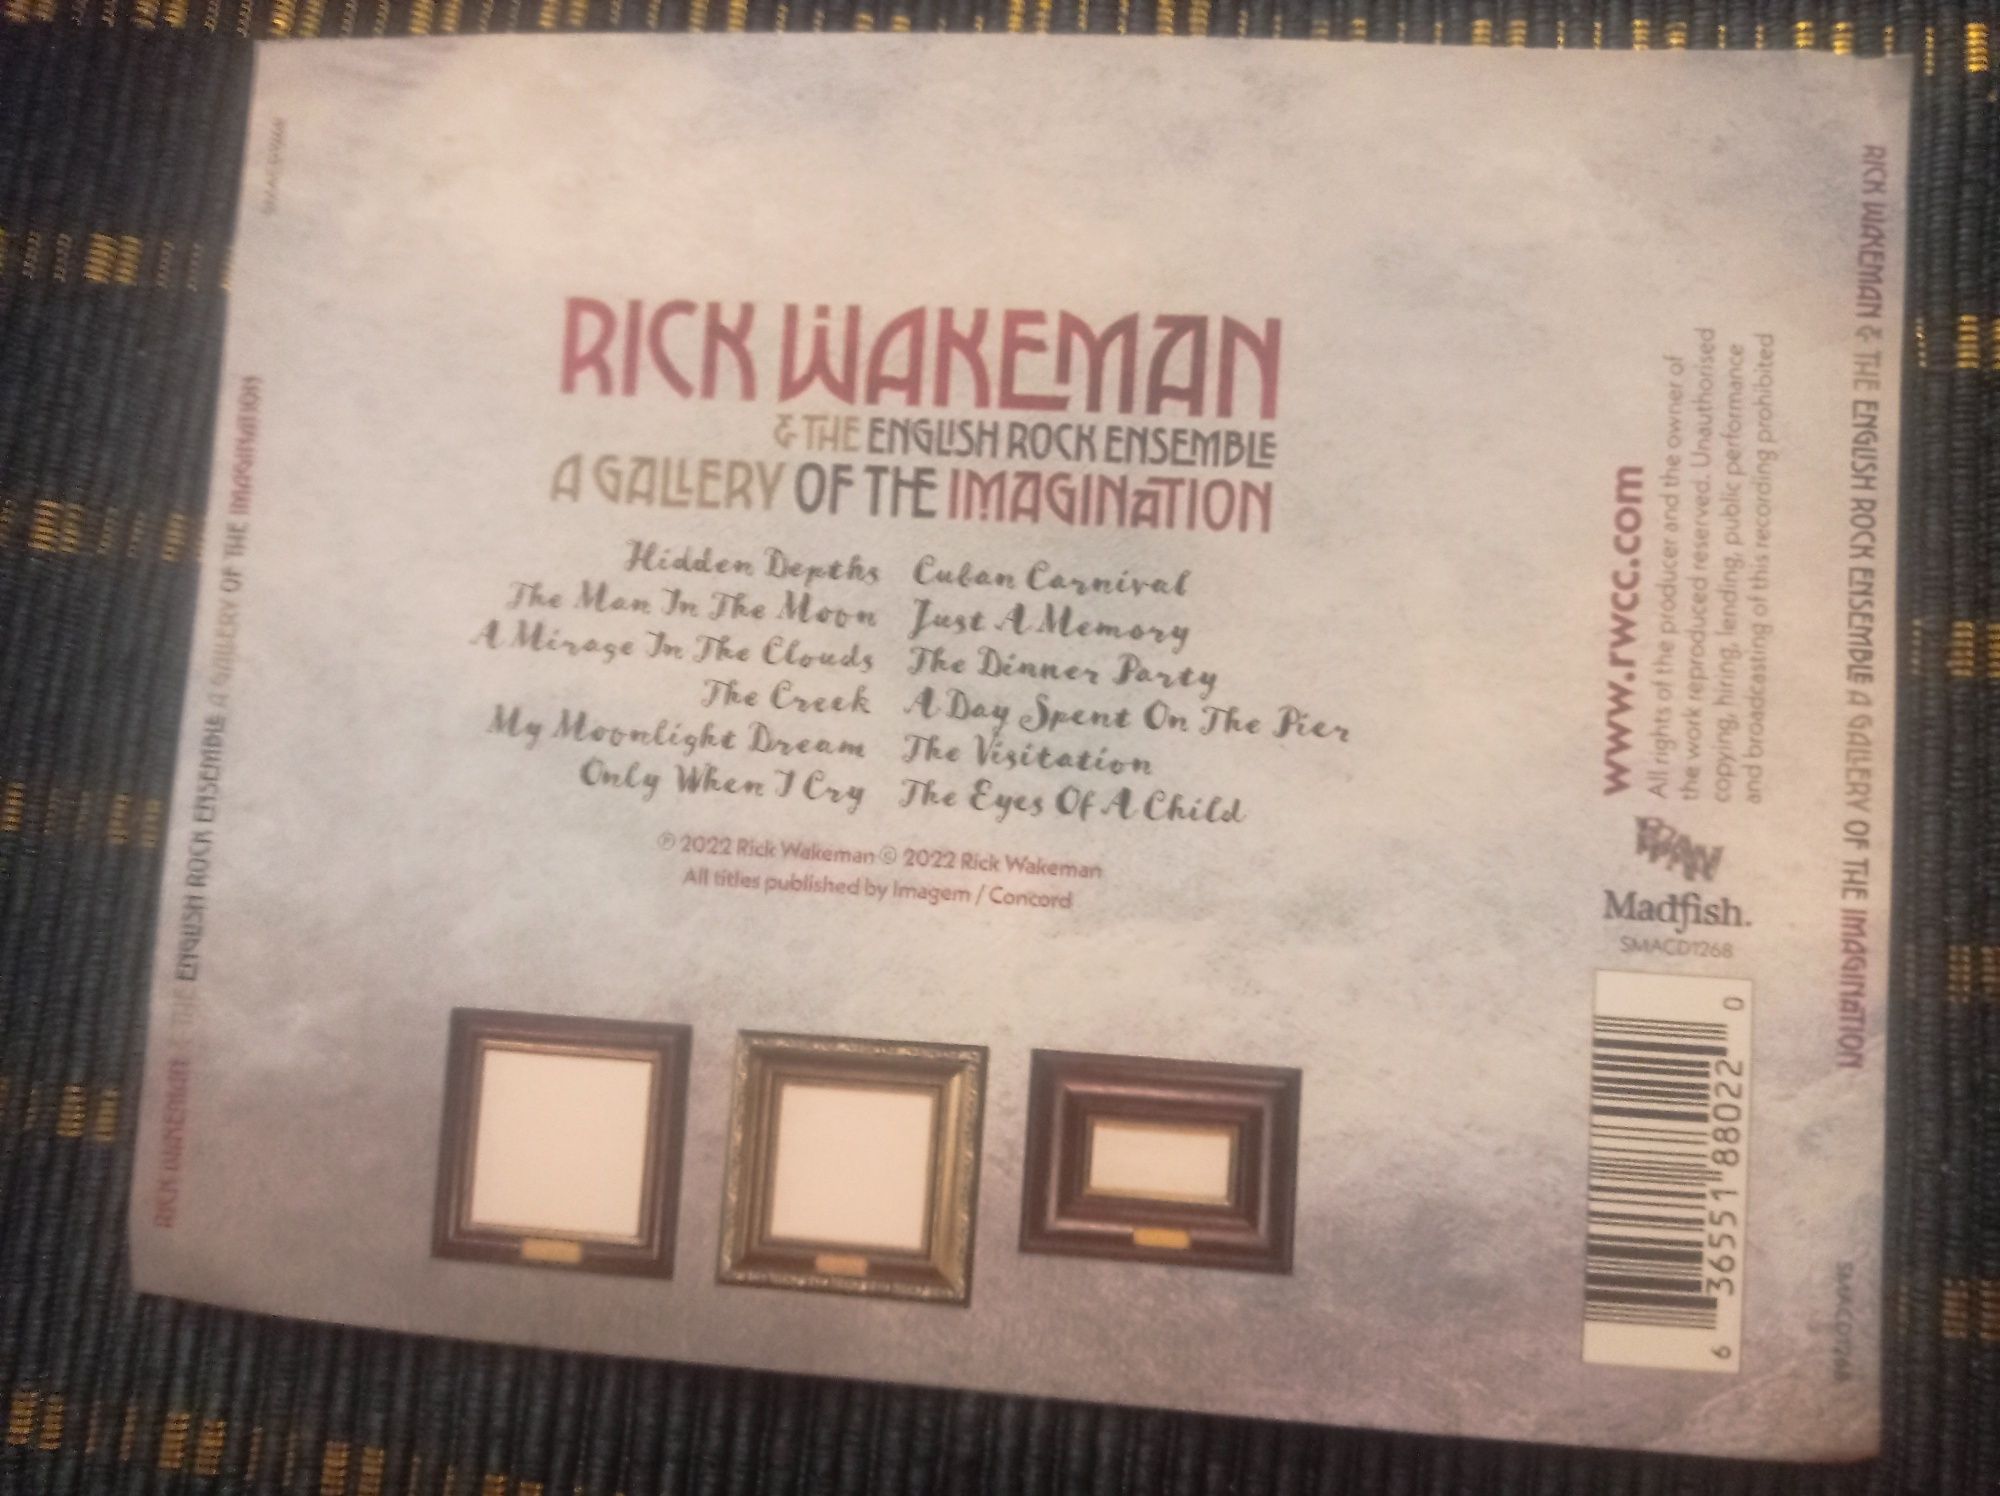 Rick Wakeman - The English rock ensemble